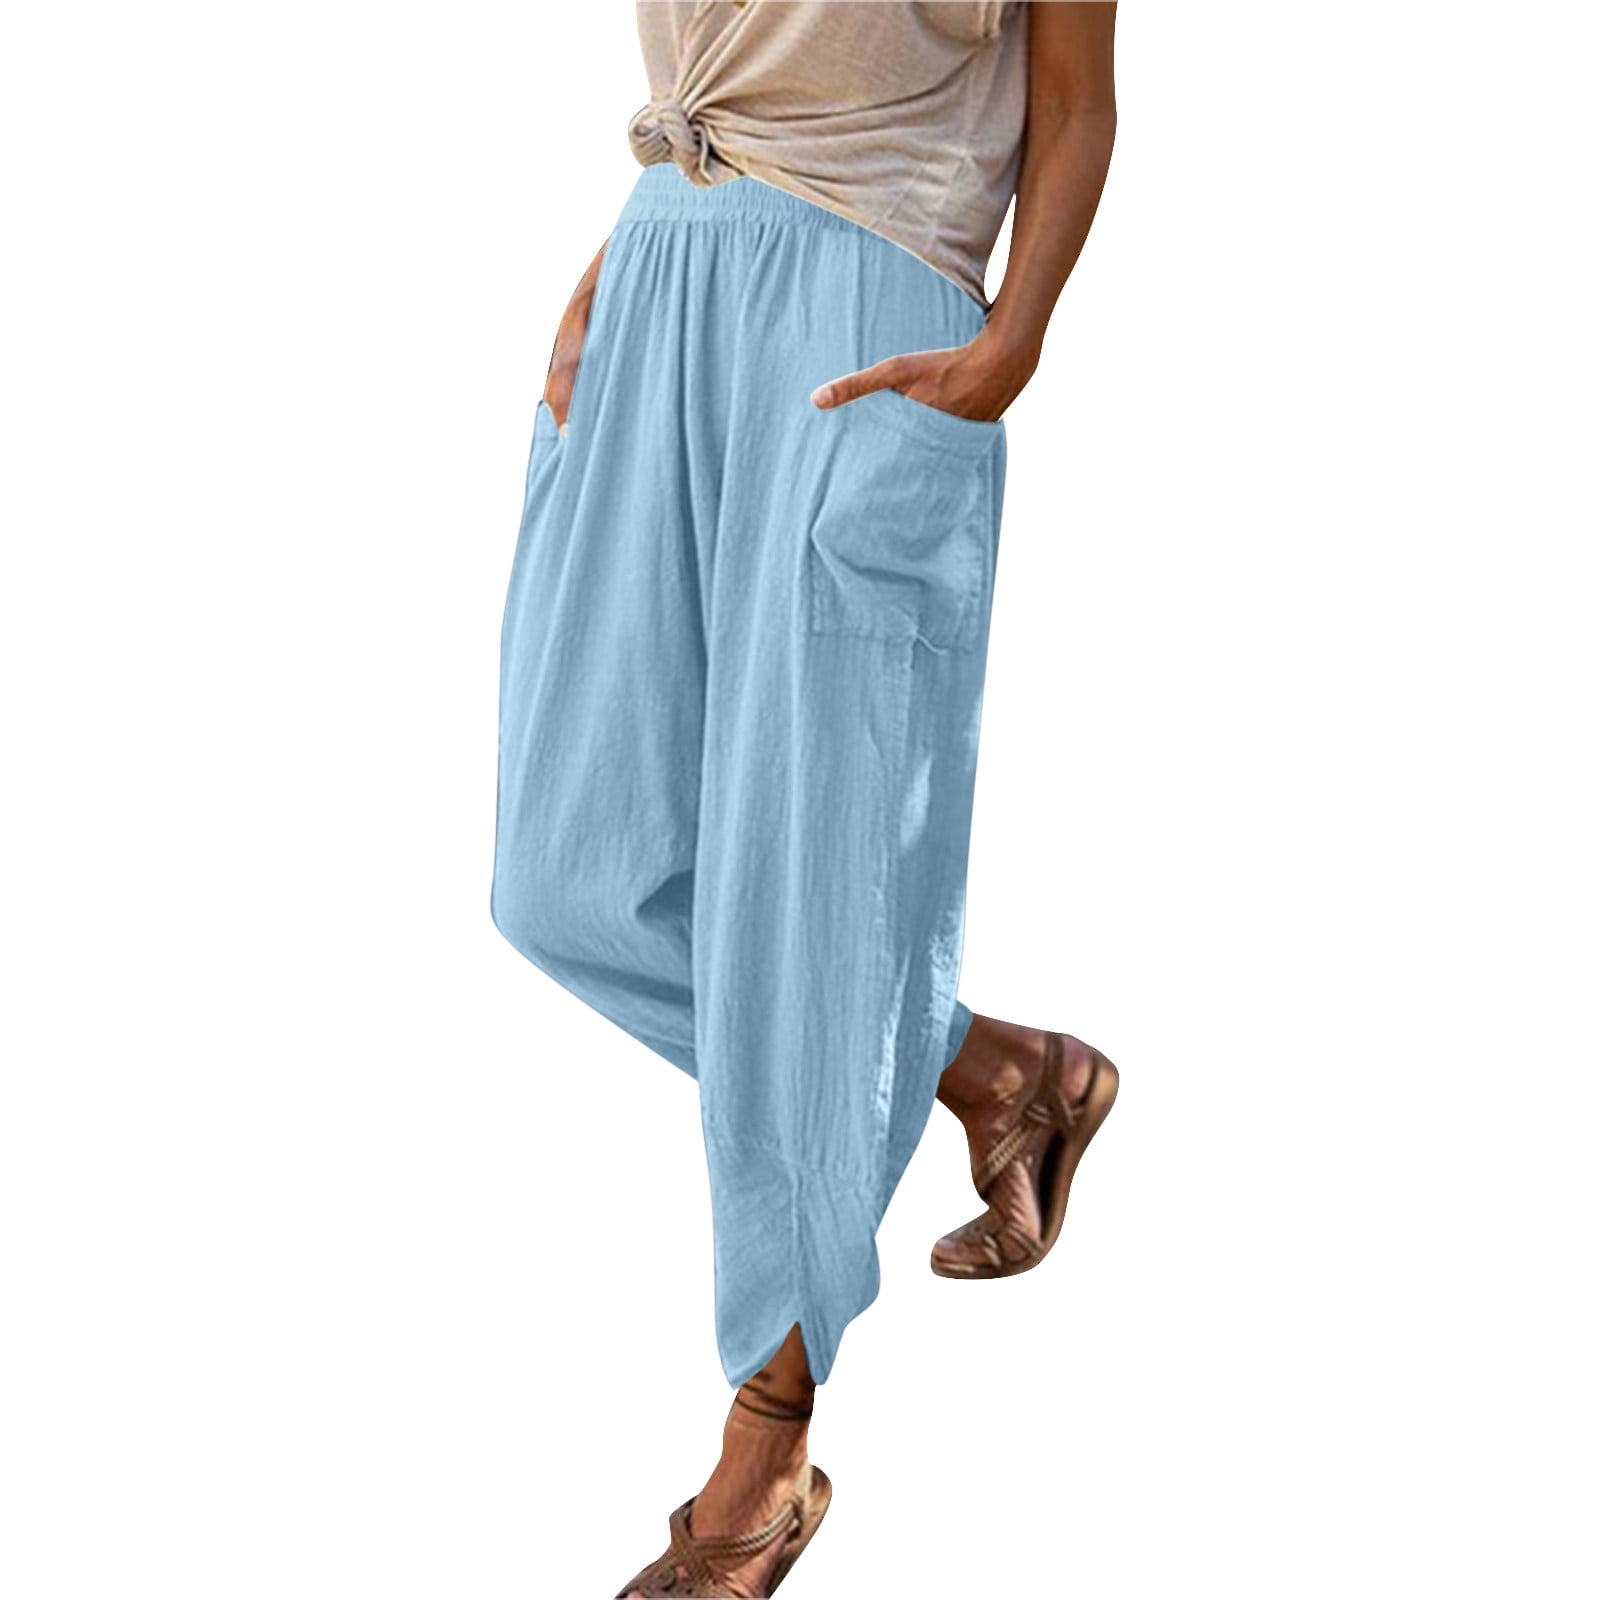 adviicd Sports for Women Casual Summer Pants Womens Cotton Linen ...